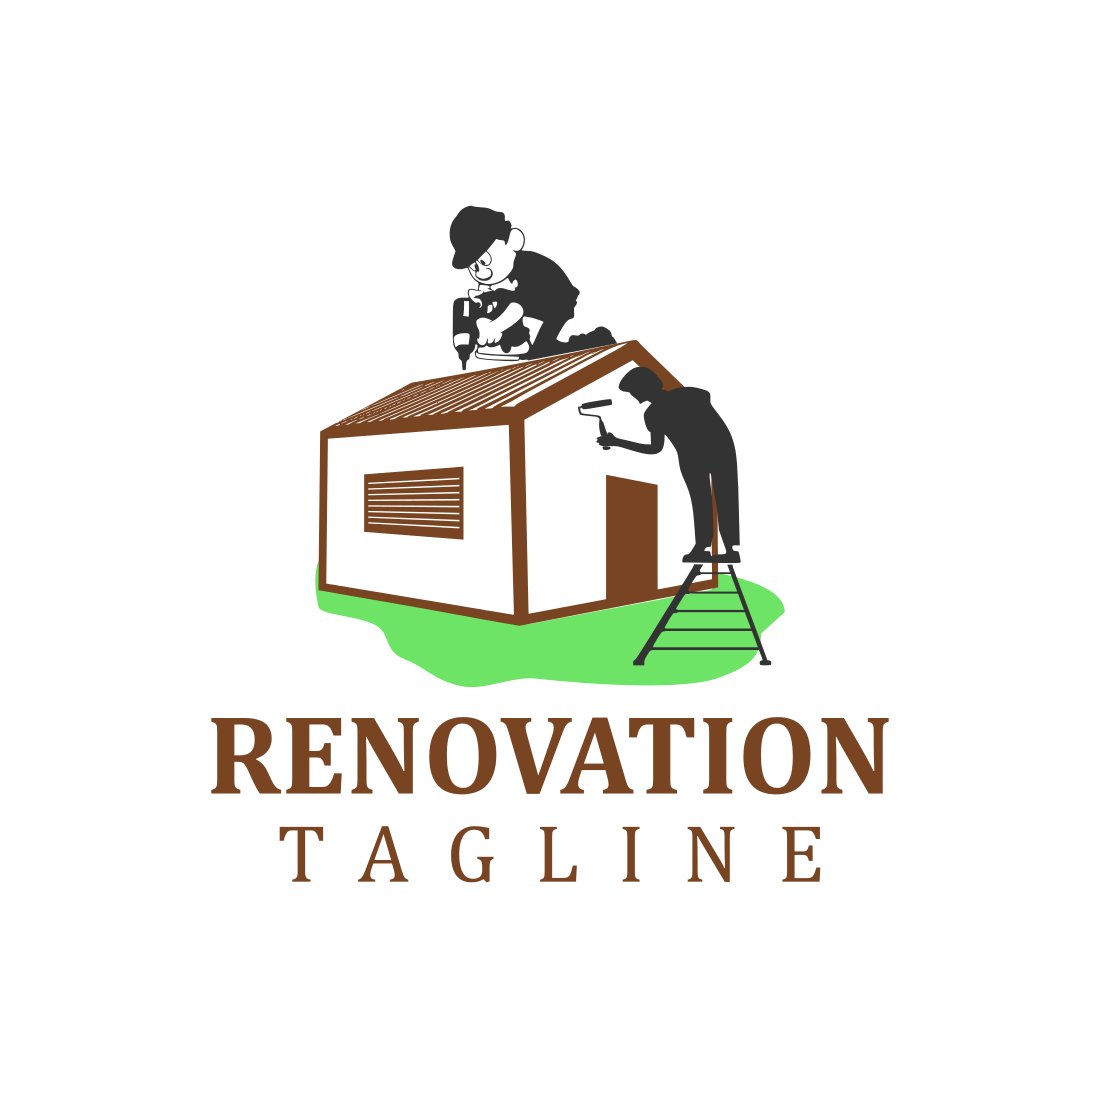 Modern Renovation Custom Logo Design Template cover image.